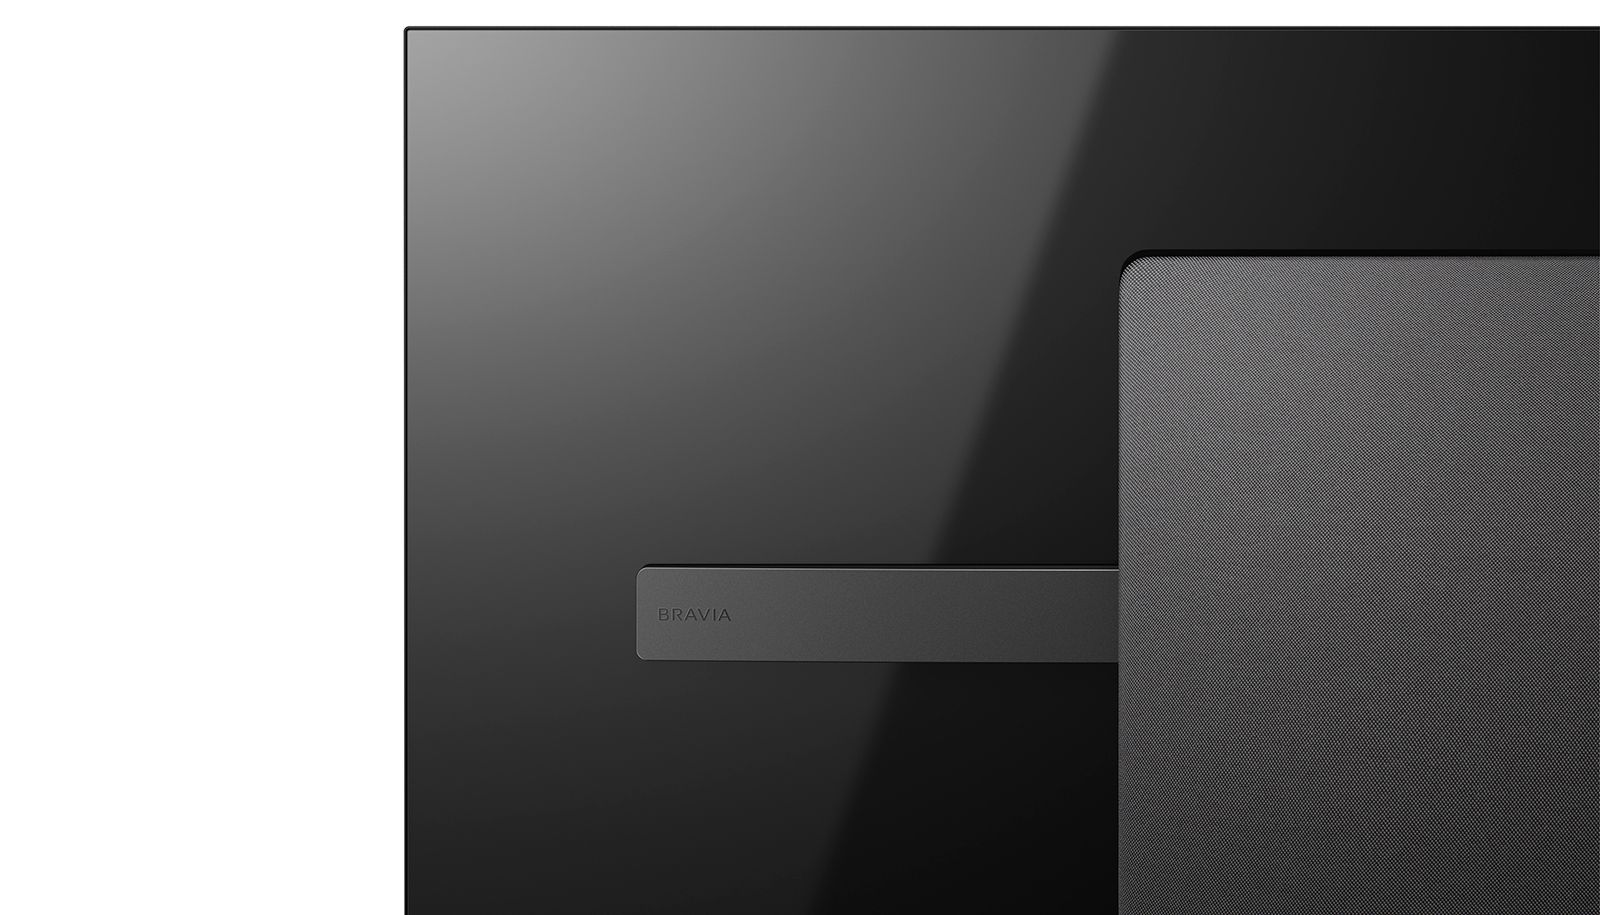 Sony A1 Bravia OLED 4K TV image 6